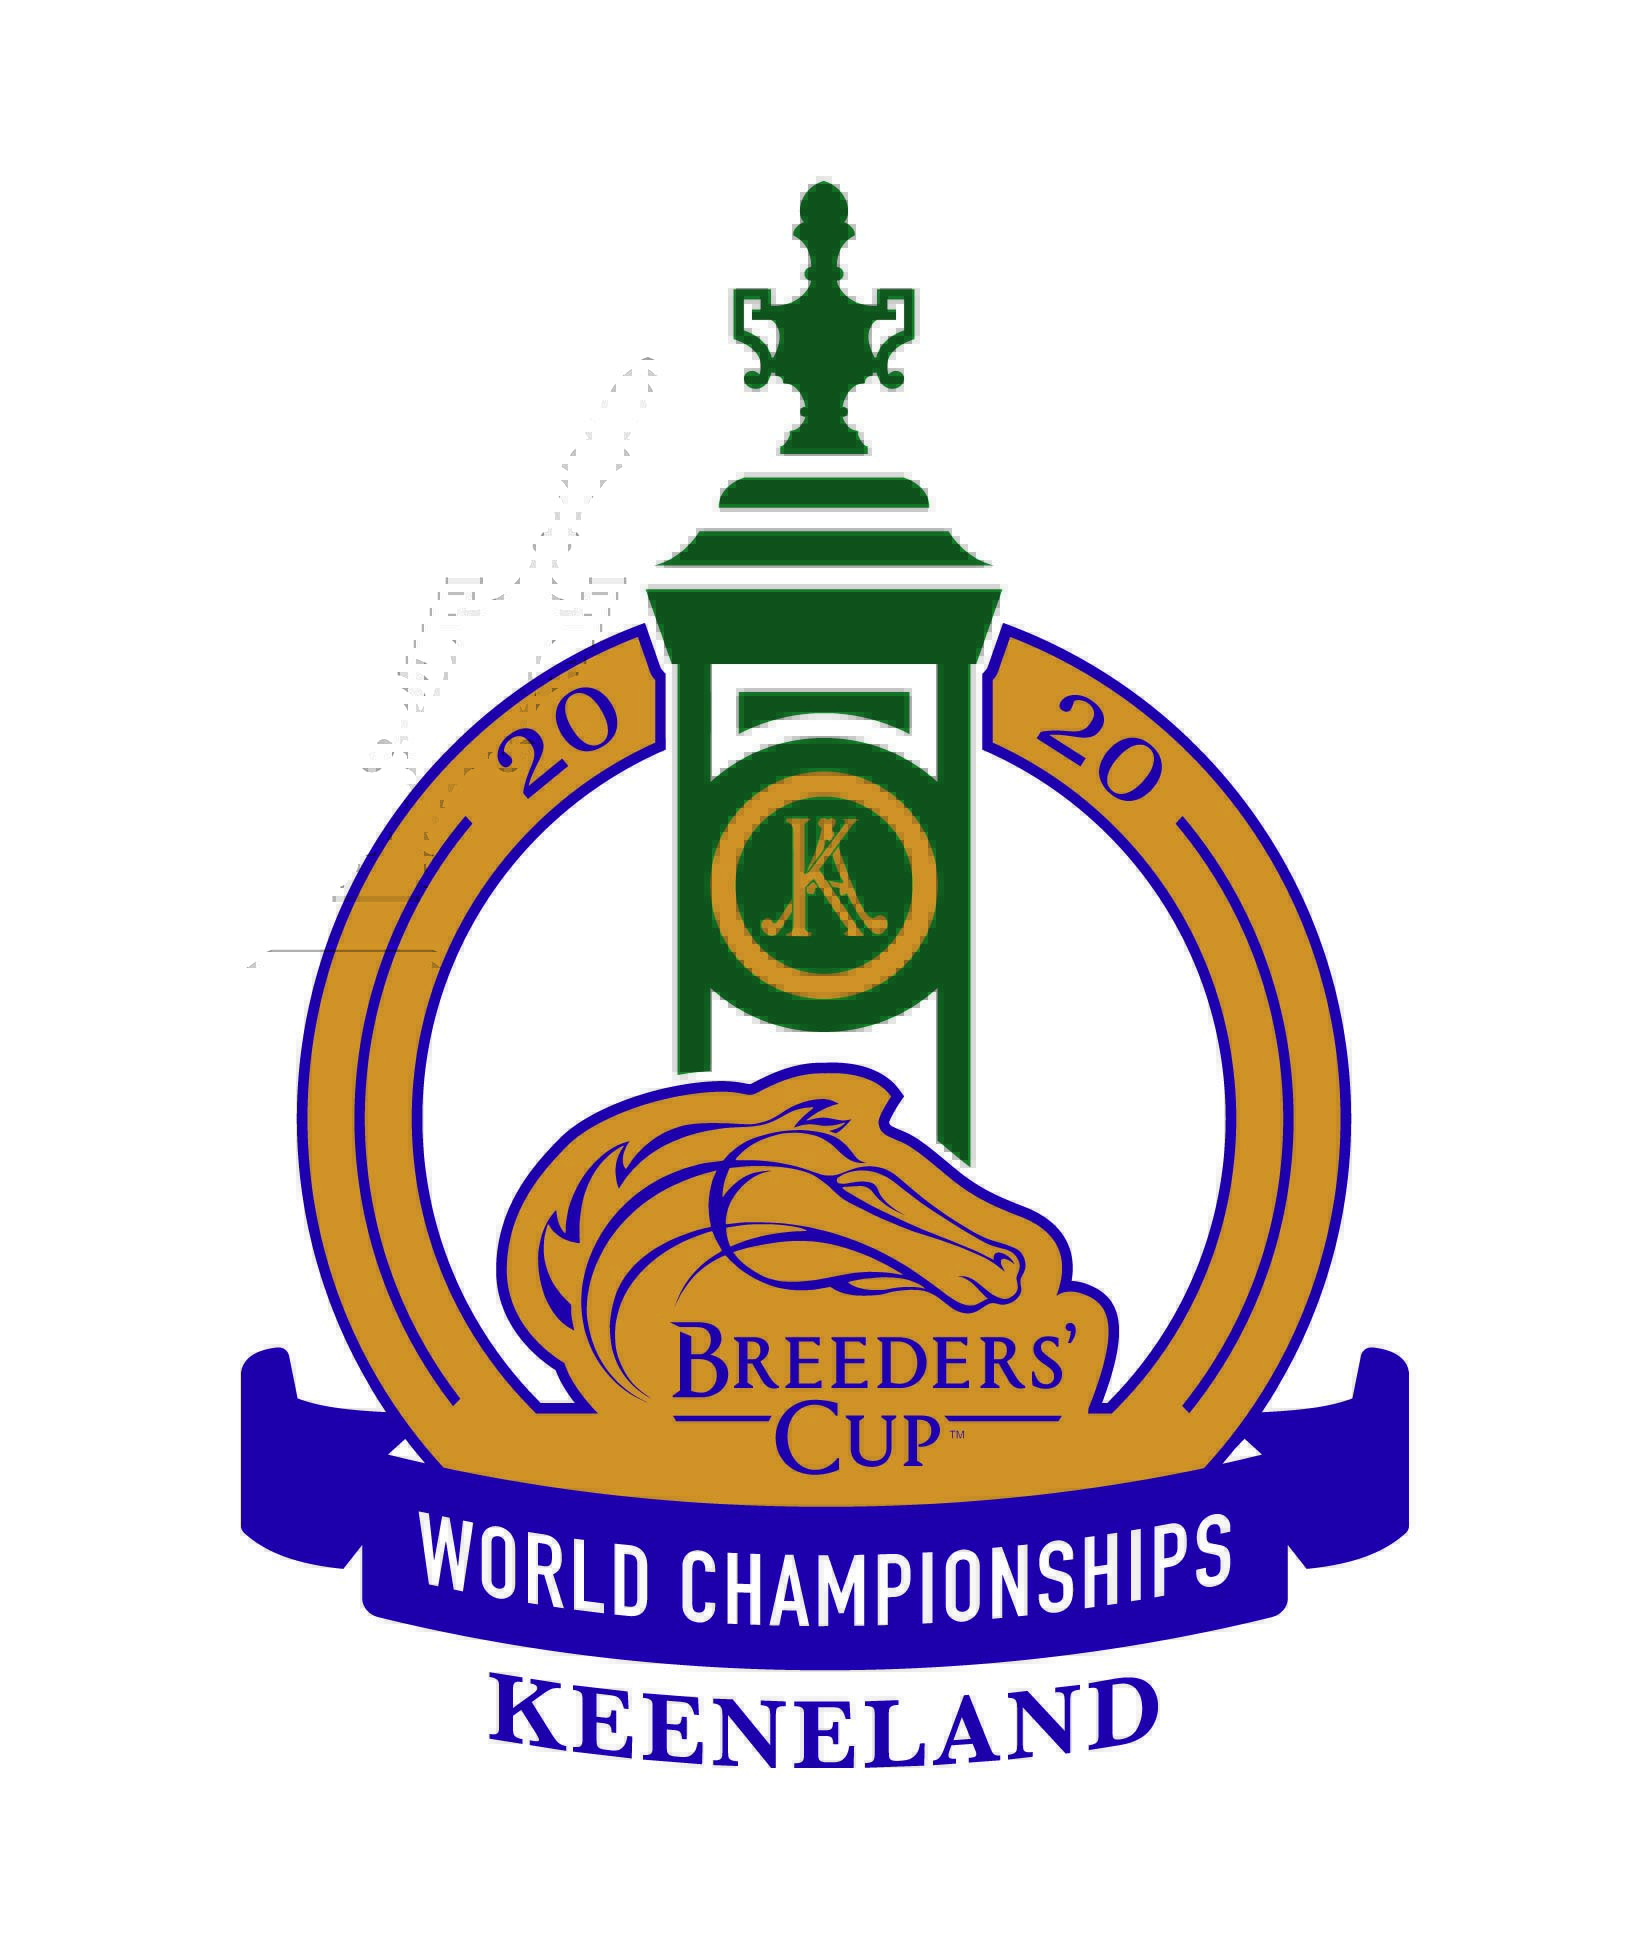 Breeders' Cup 2020 in Keeneland